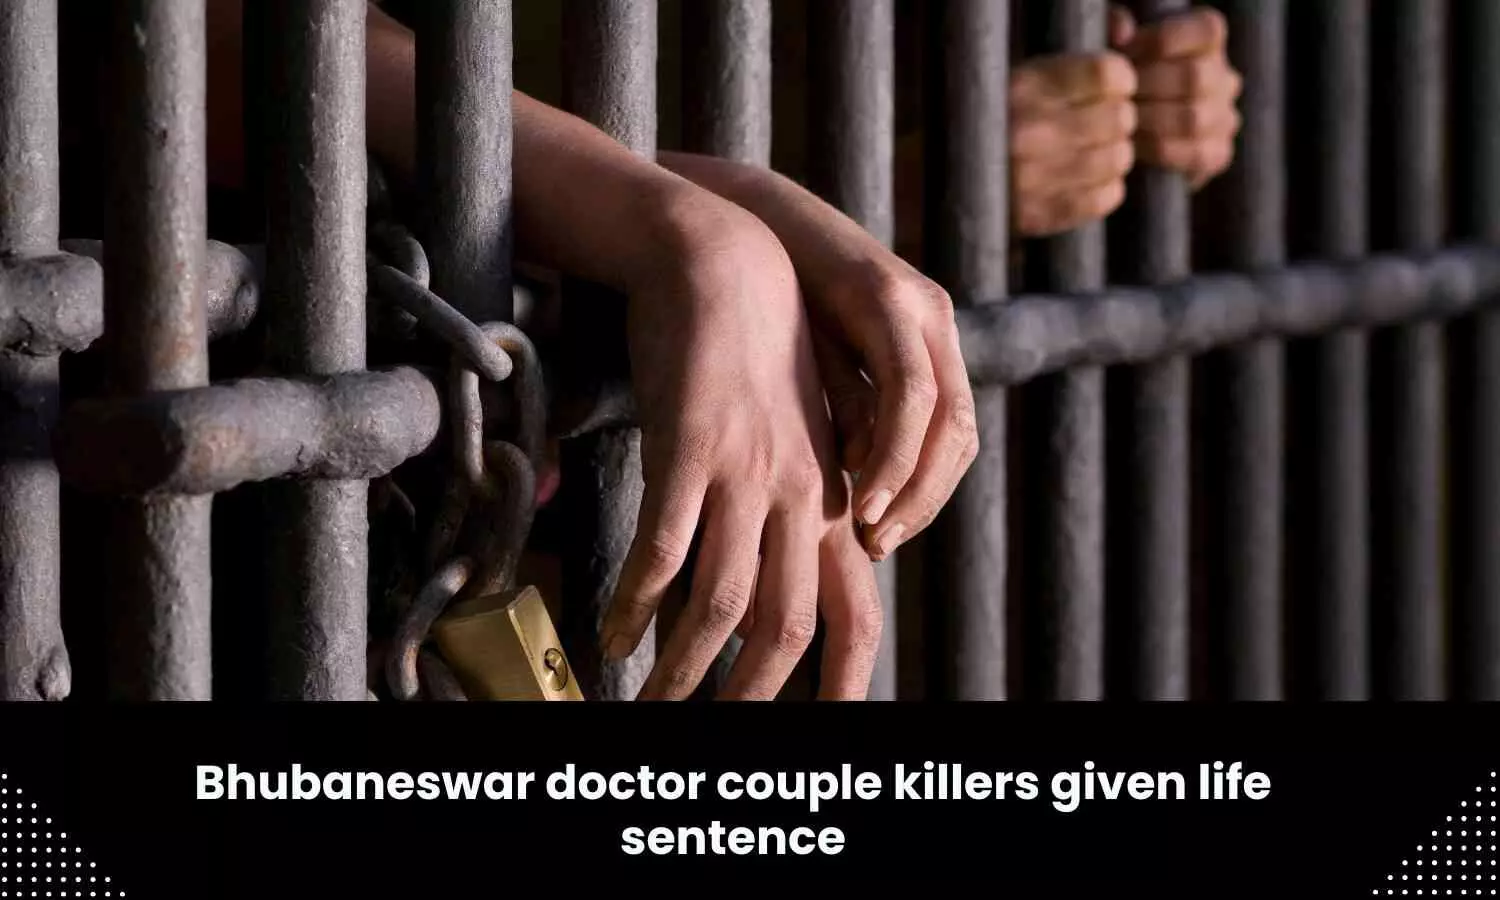 Killers given life sentence in Bhubaneswar doctor couple murder case